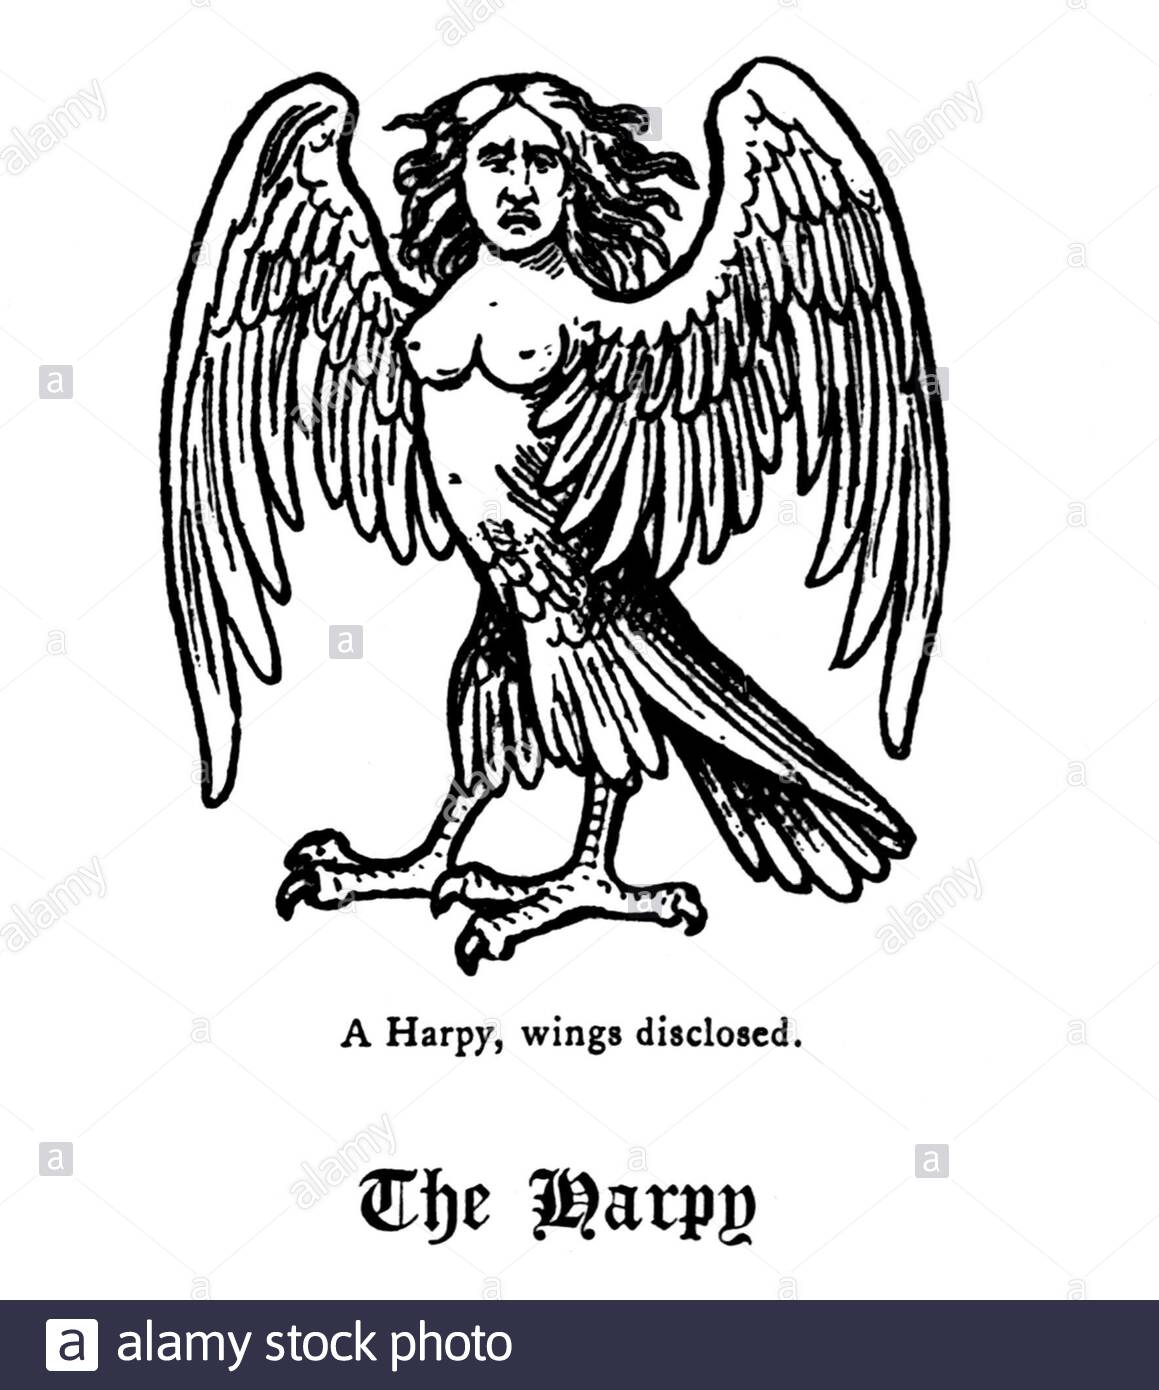 Harpy Wings enthüllt, klassische Illustration aus dem Jahr 1900 Stockfoto